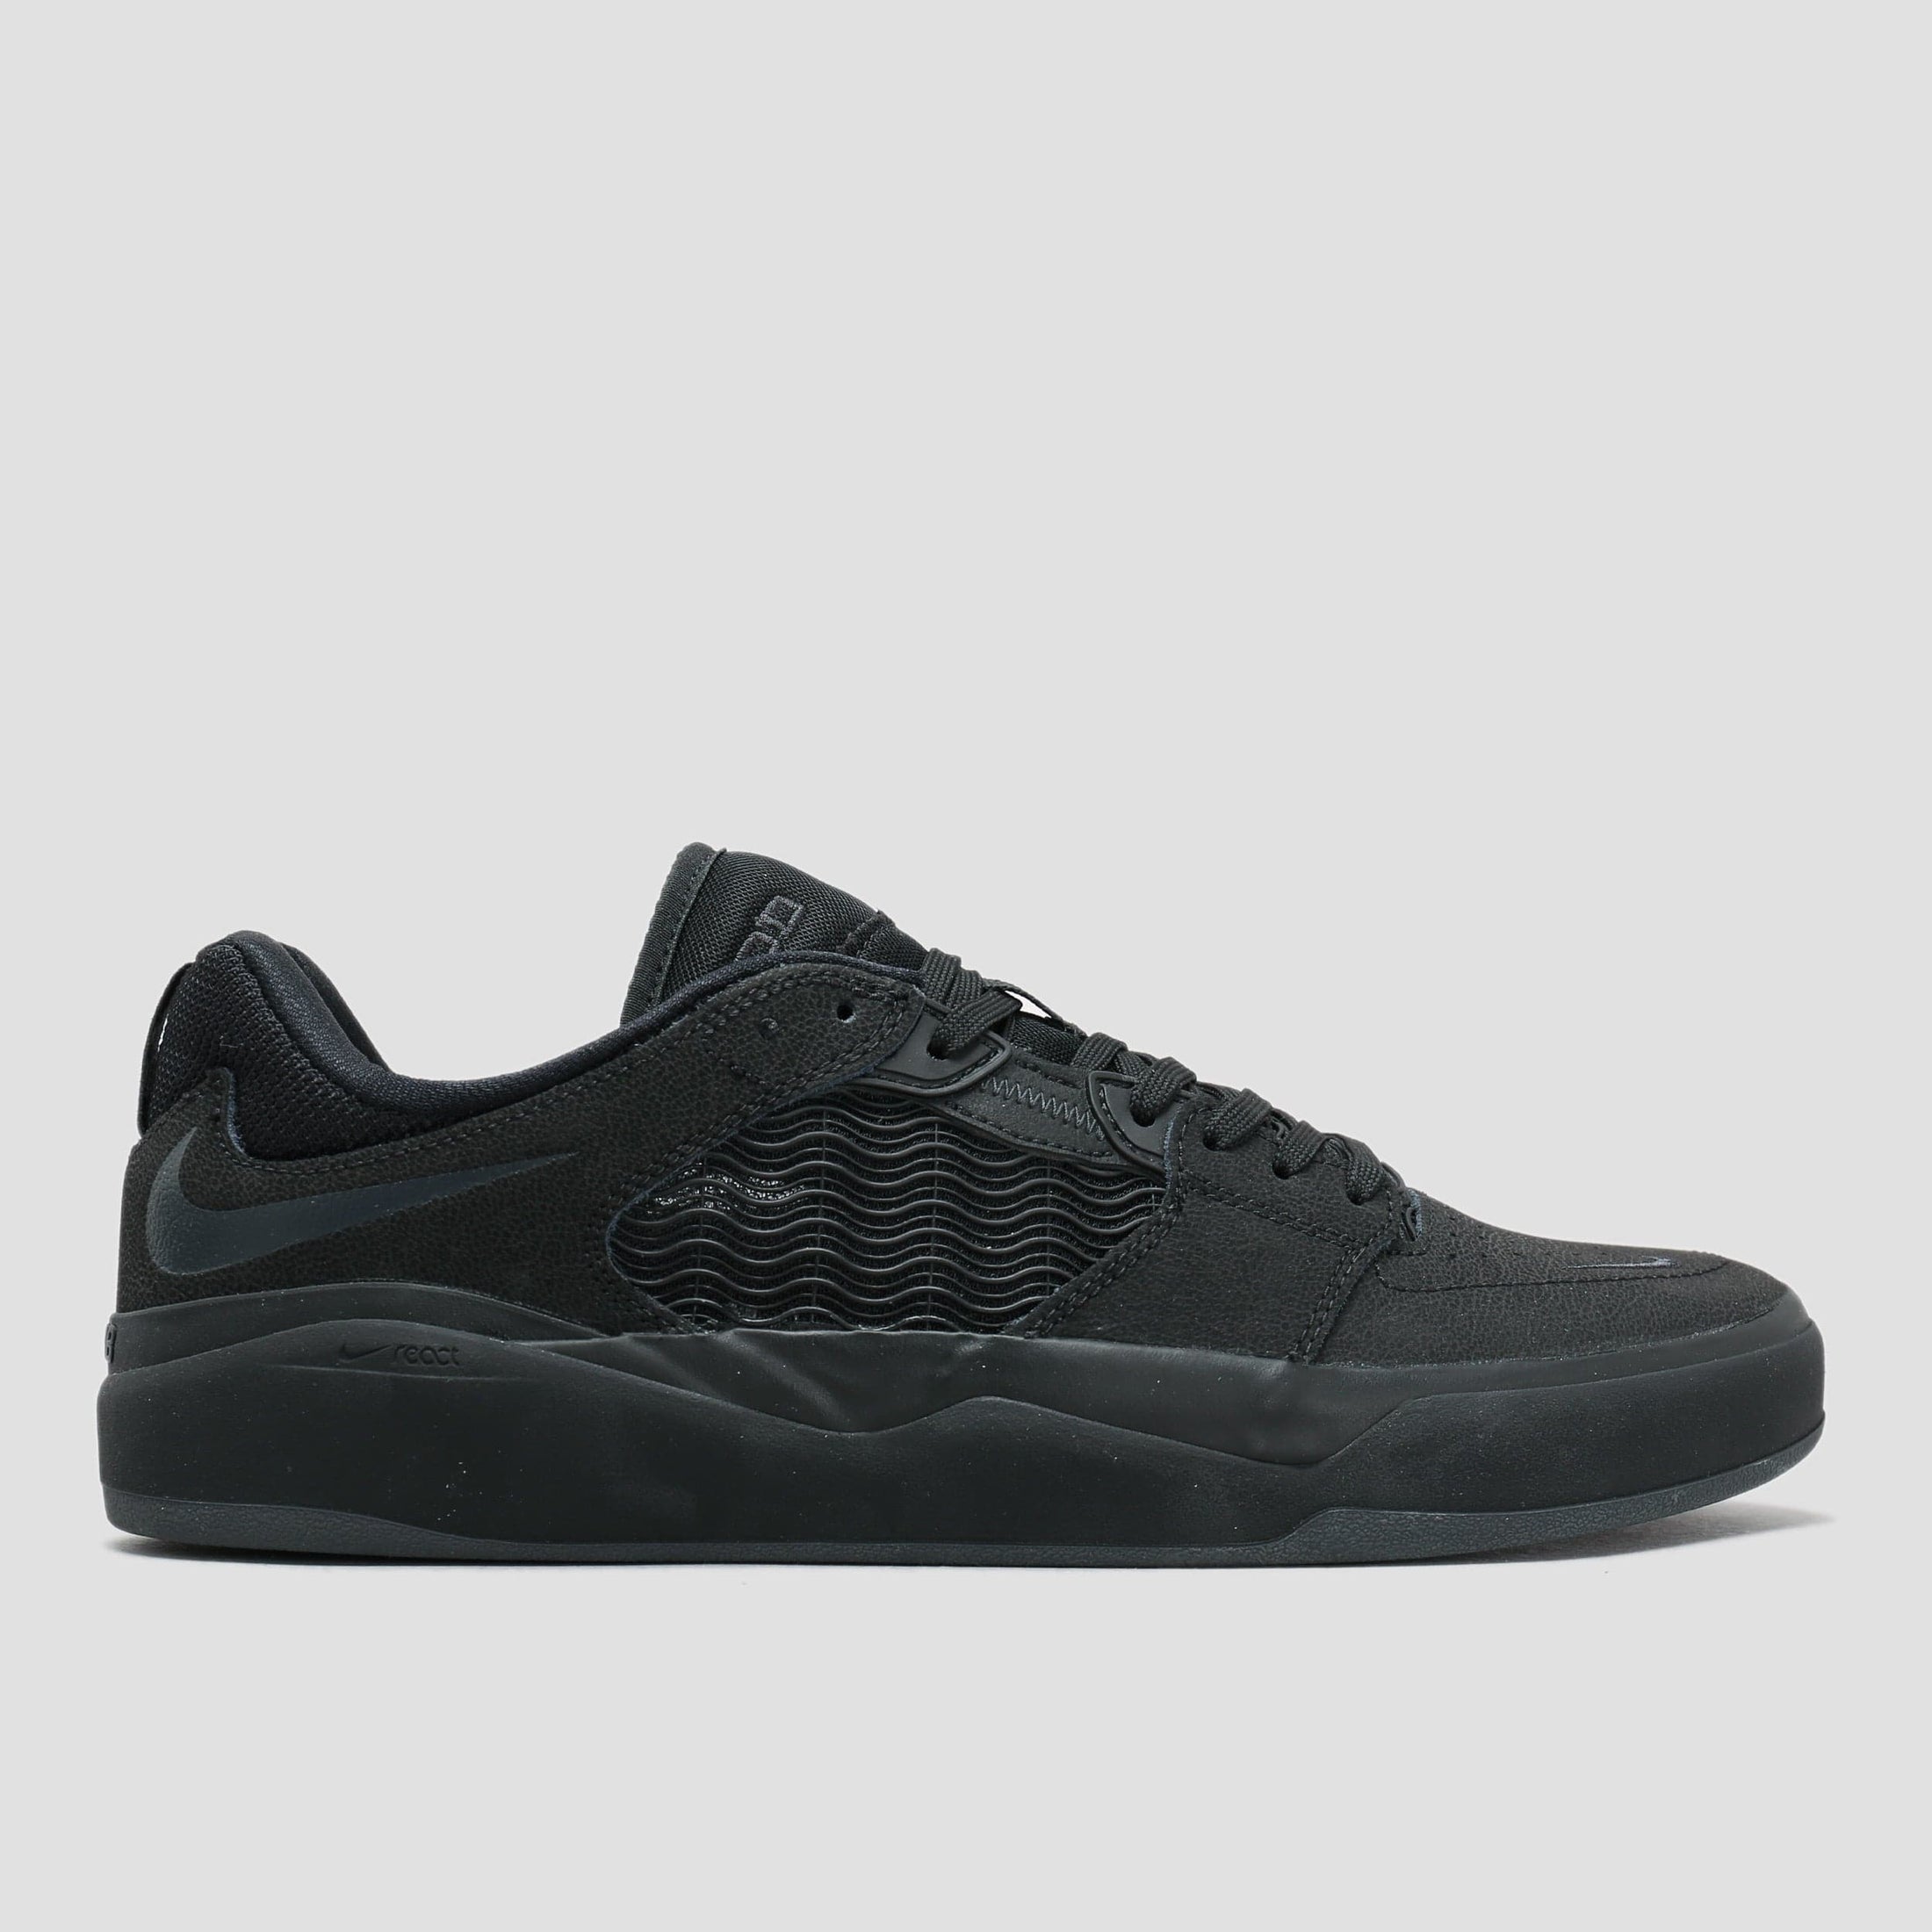 Nike SB Ishod Premium Shoes Black/Black